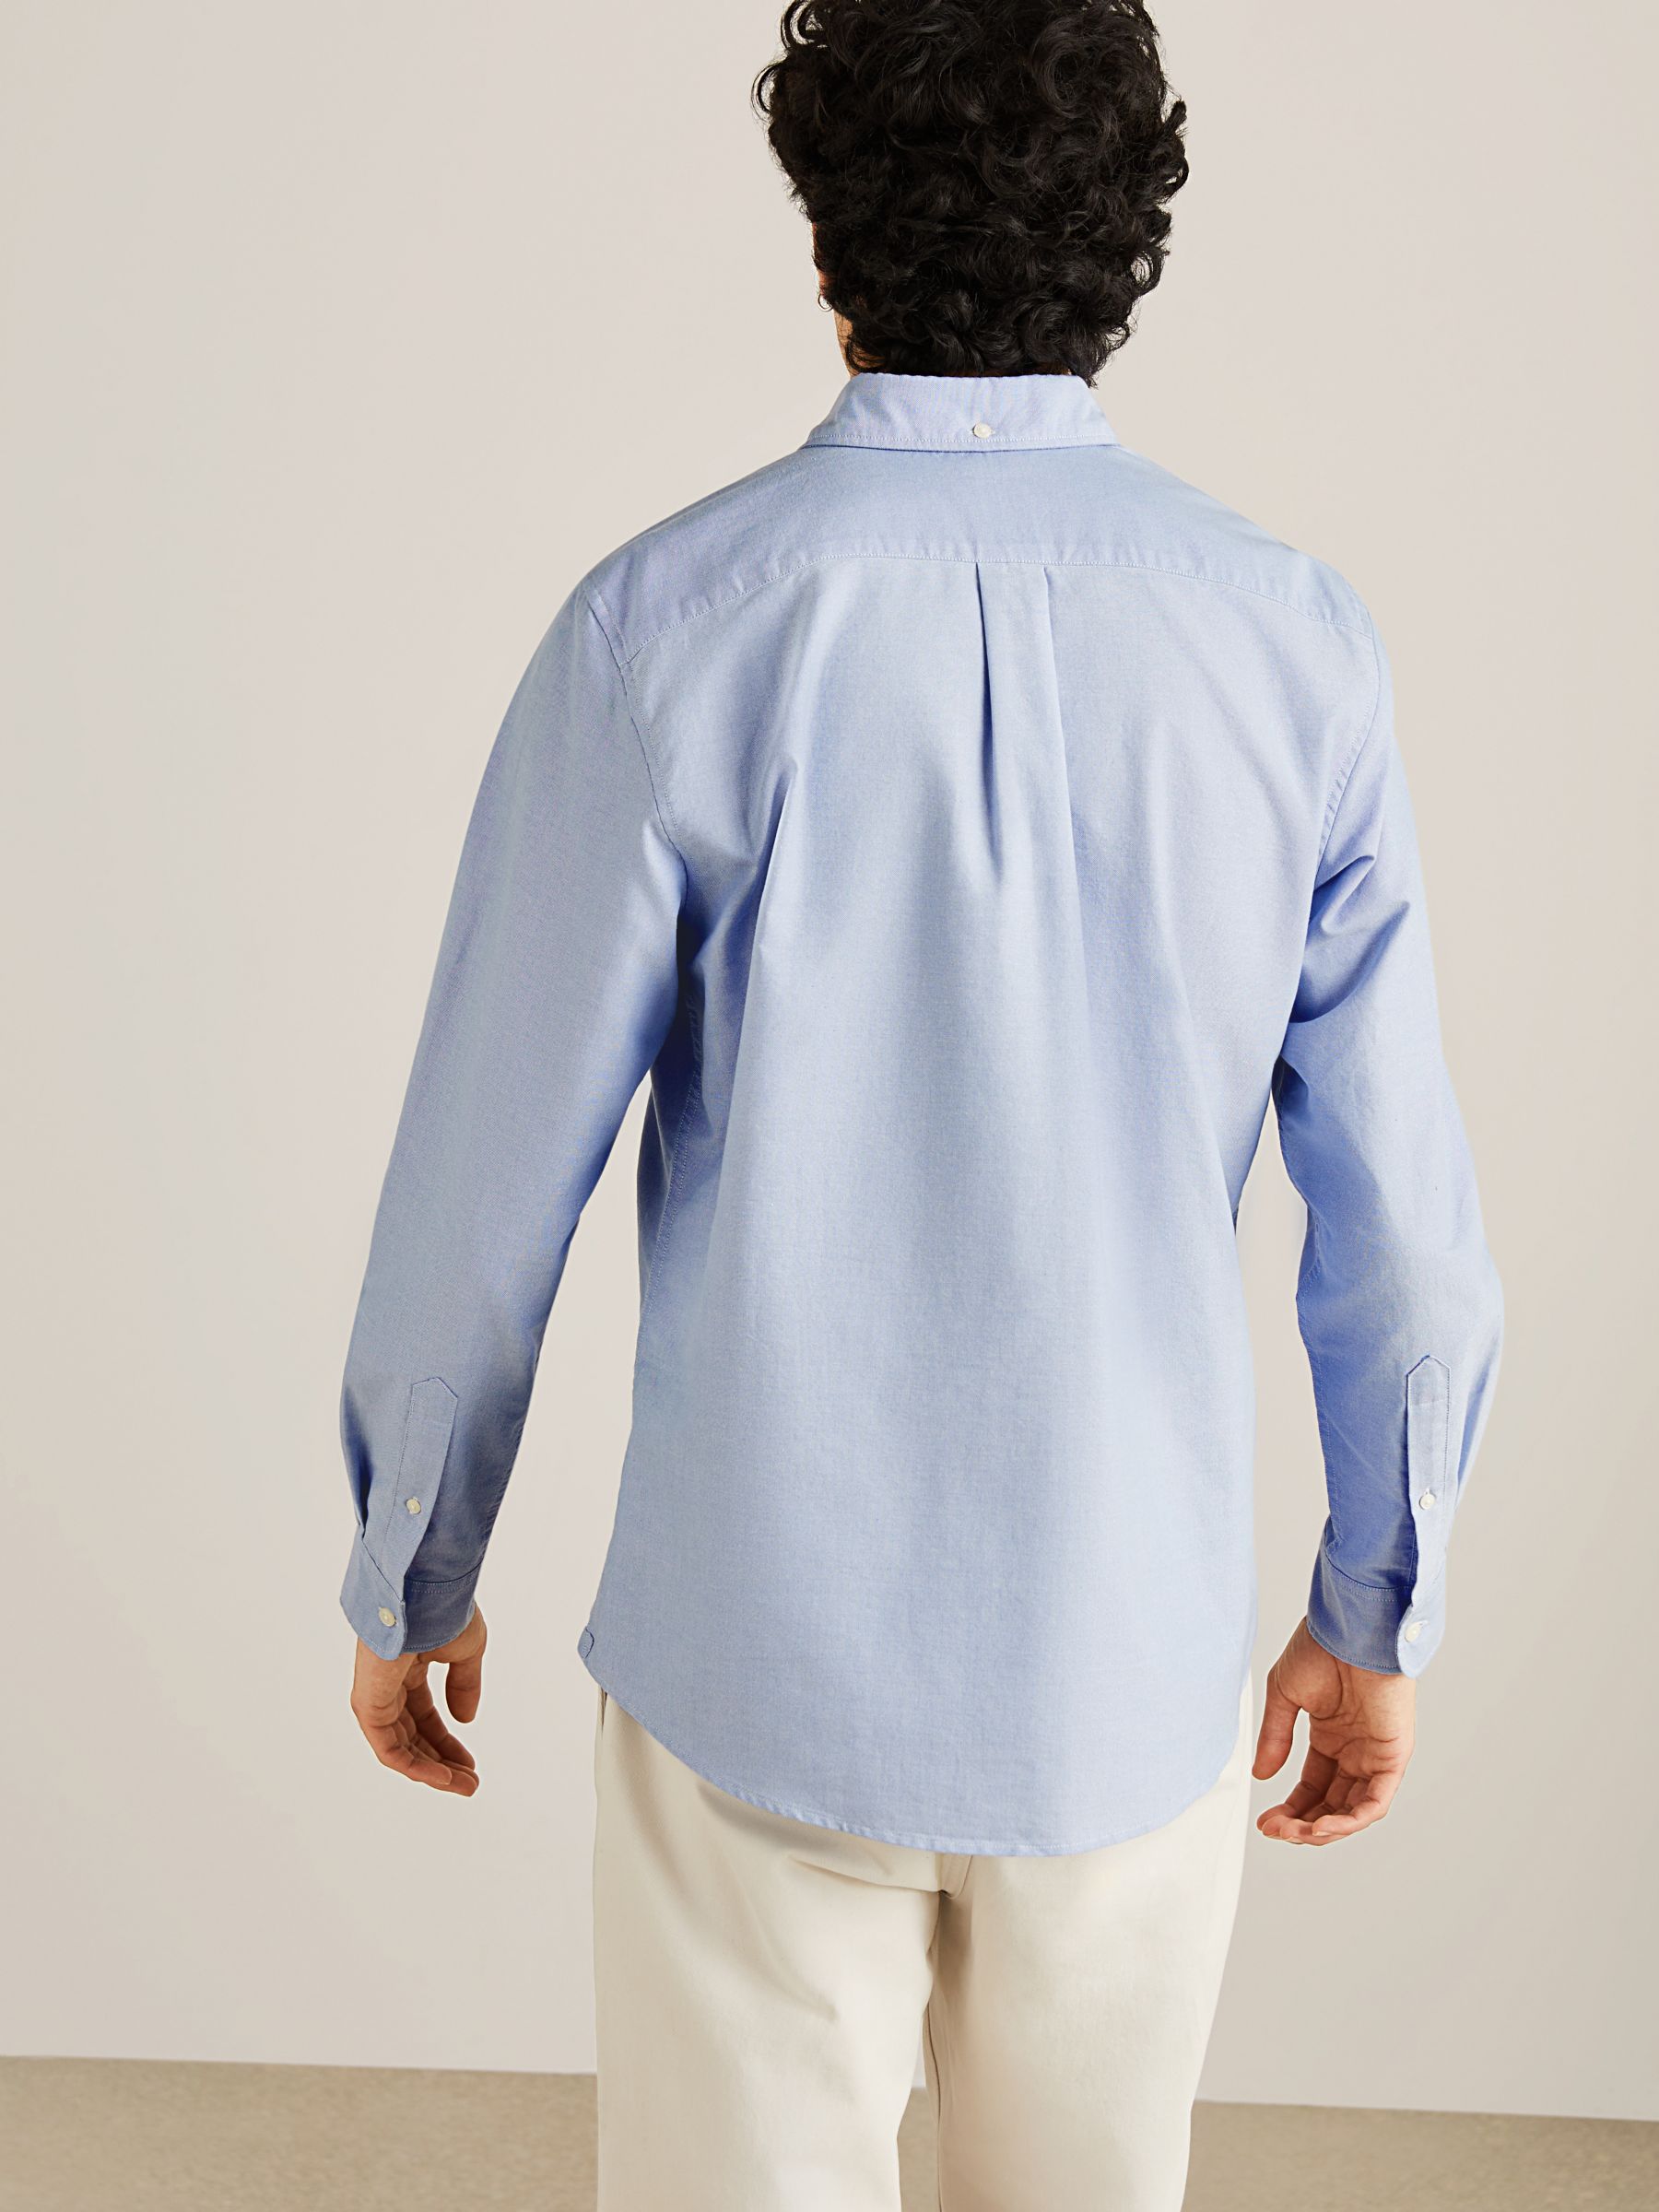 John Lewis Regular Fit Cotton Oxford Button Down Shirt, Blue at